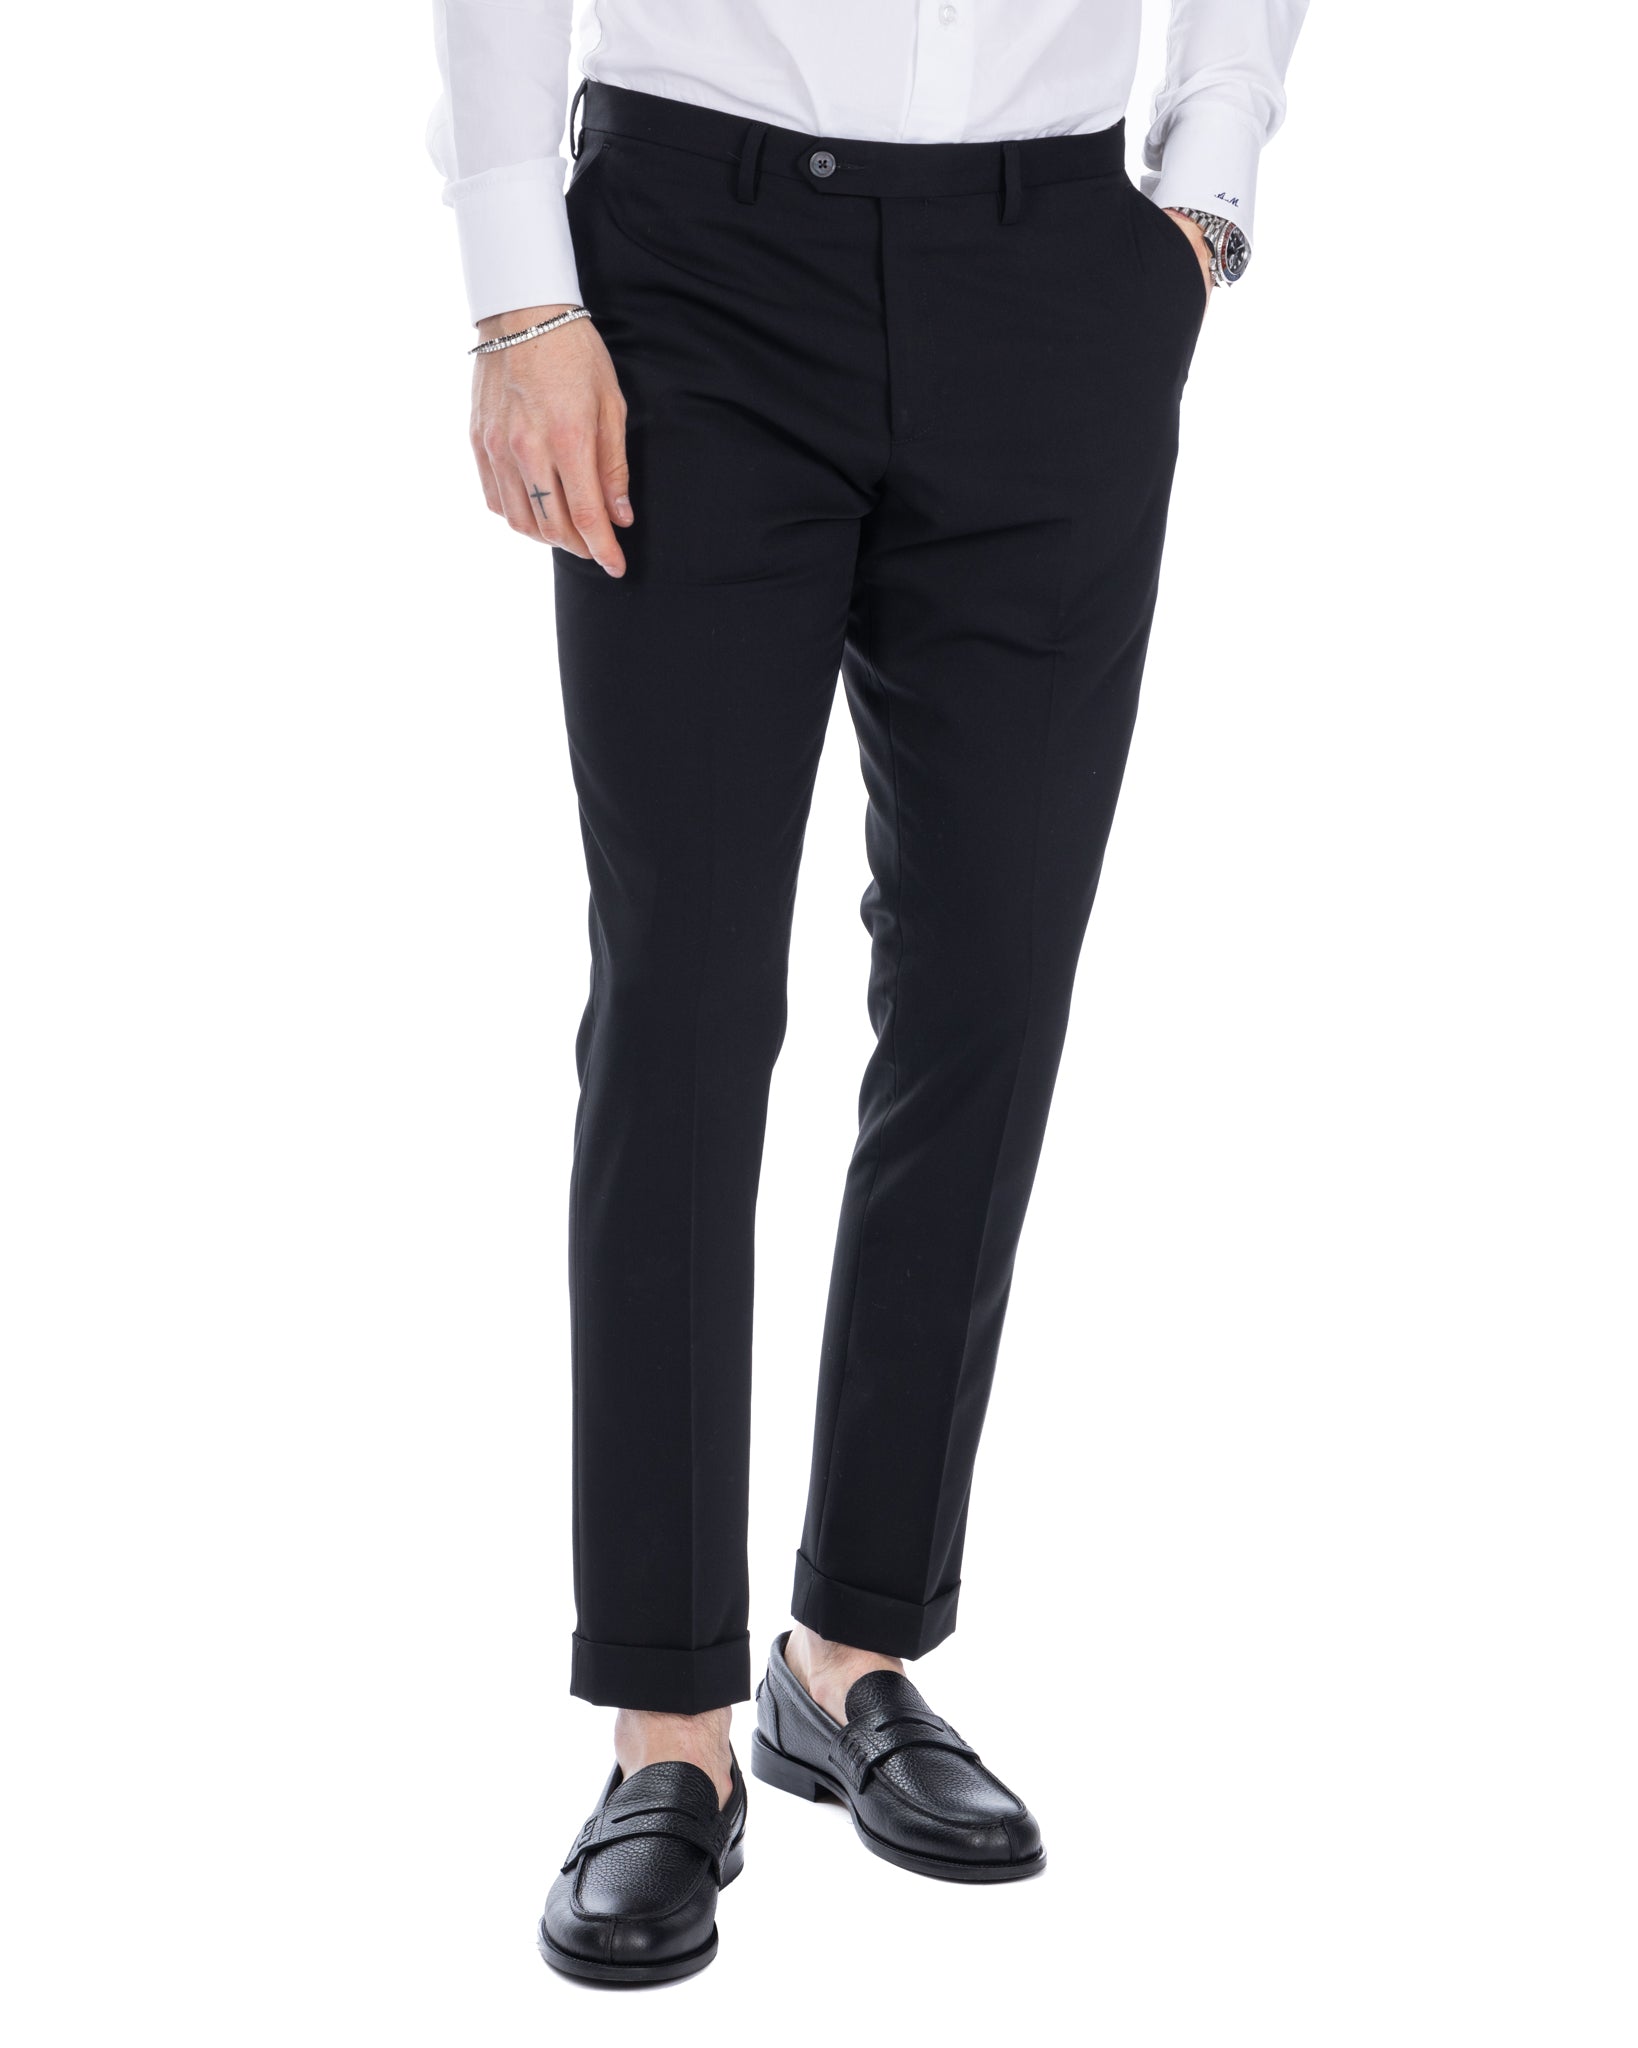 Brema - pantalon basique noir